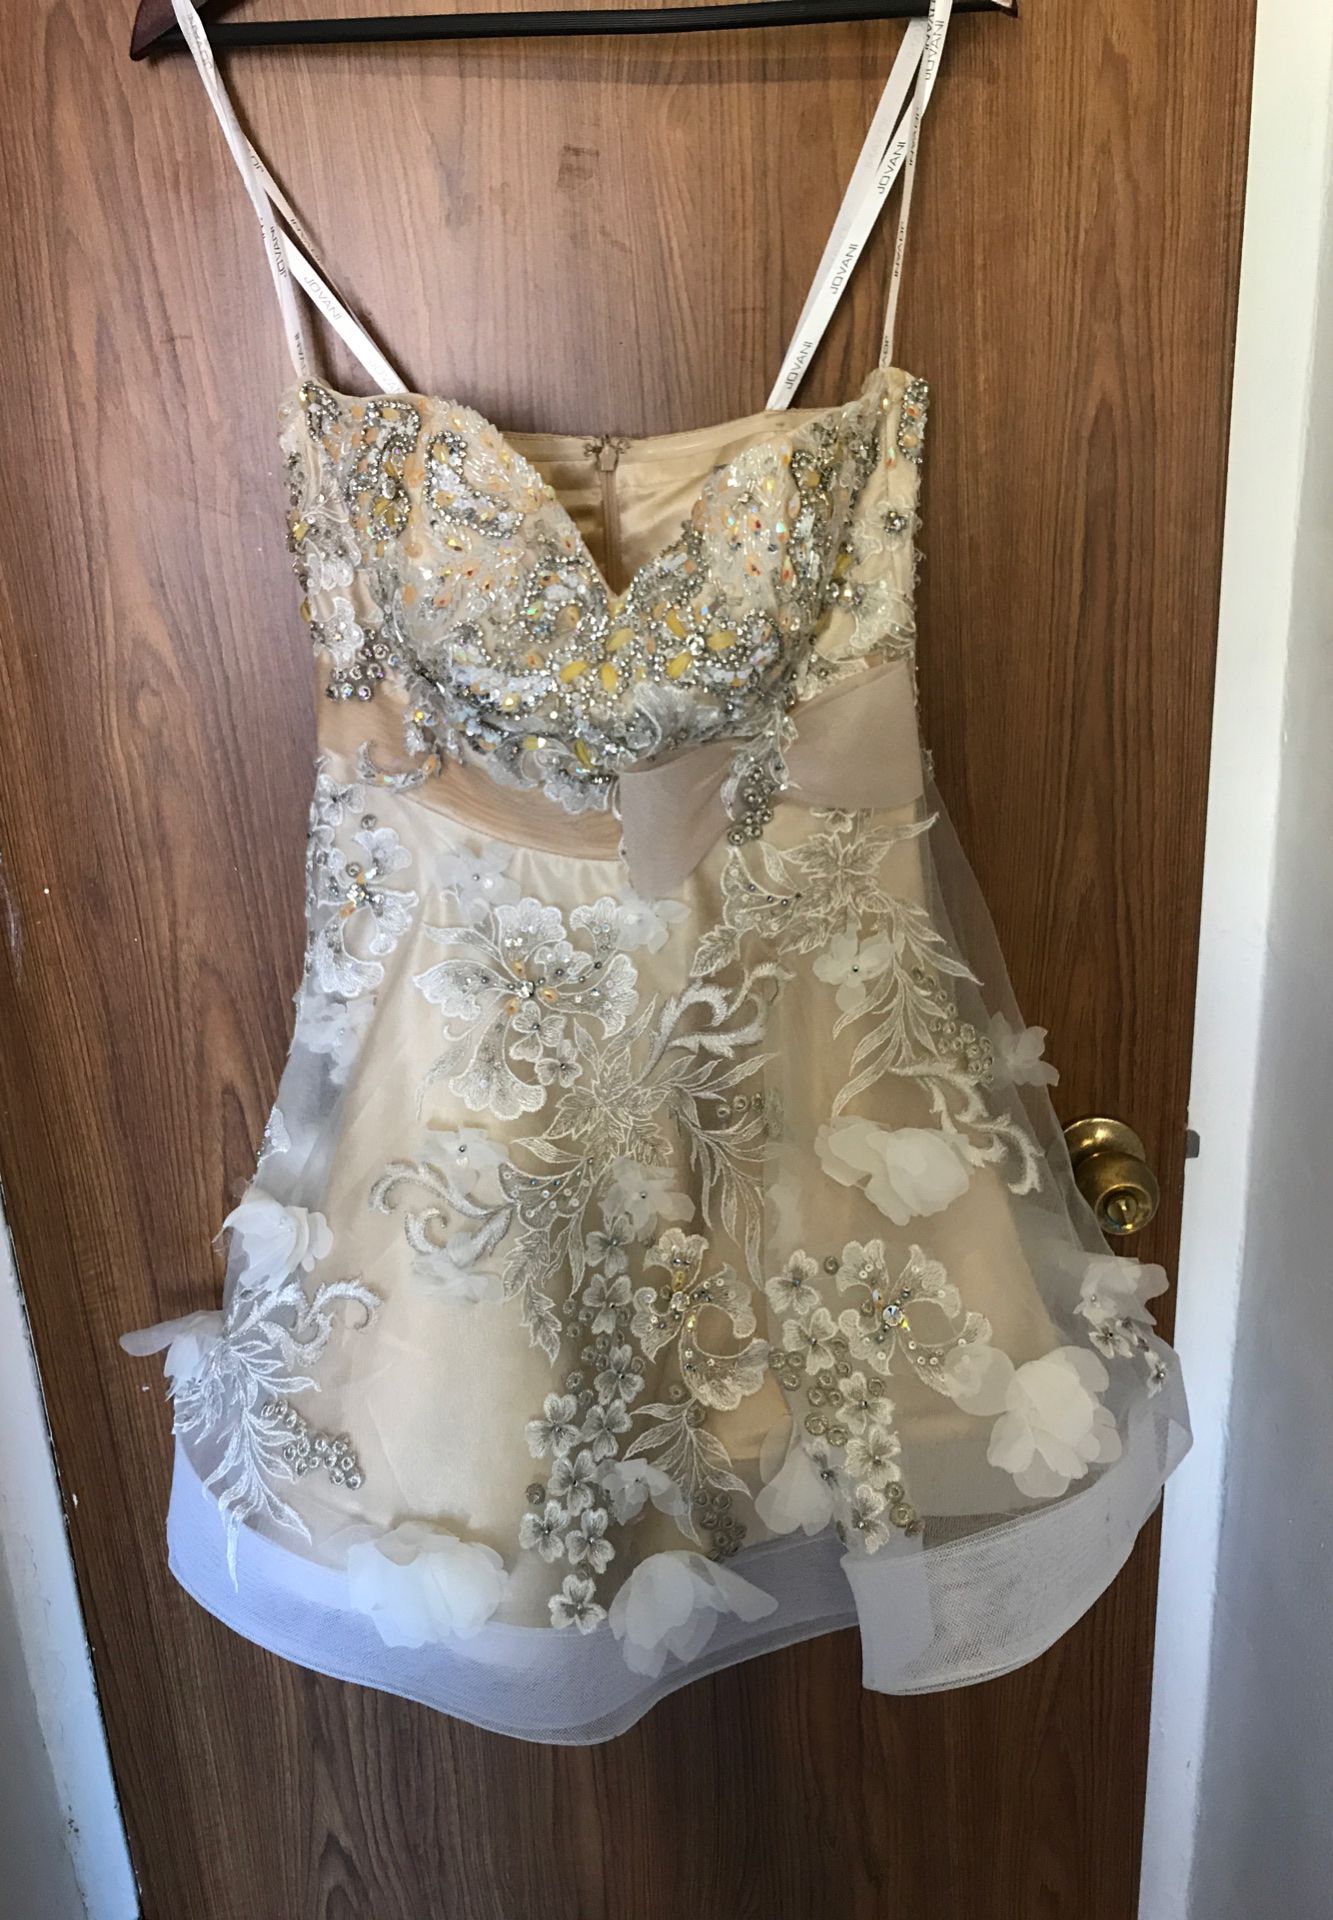 Wedding or prom dress